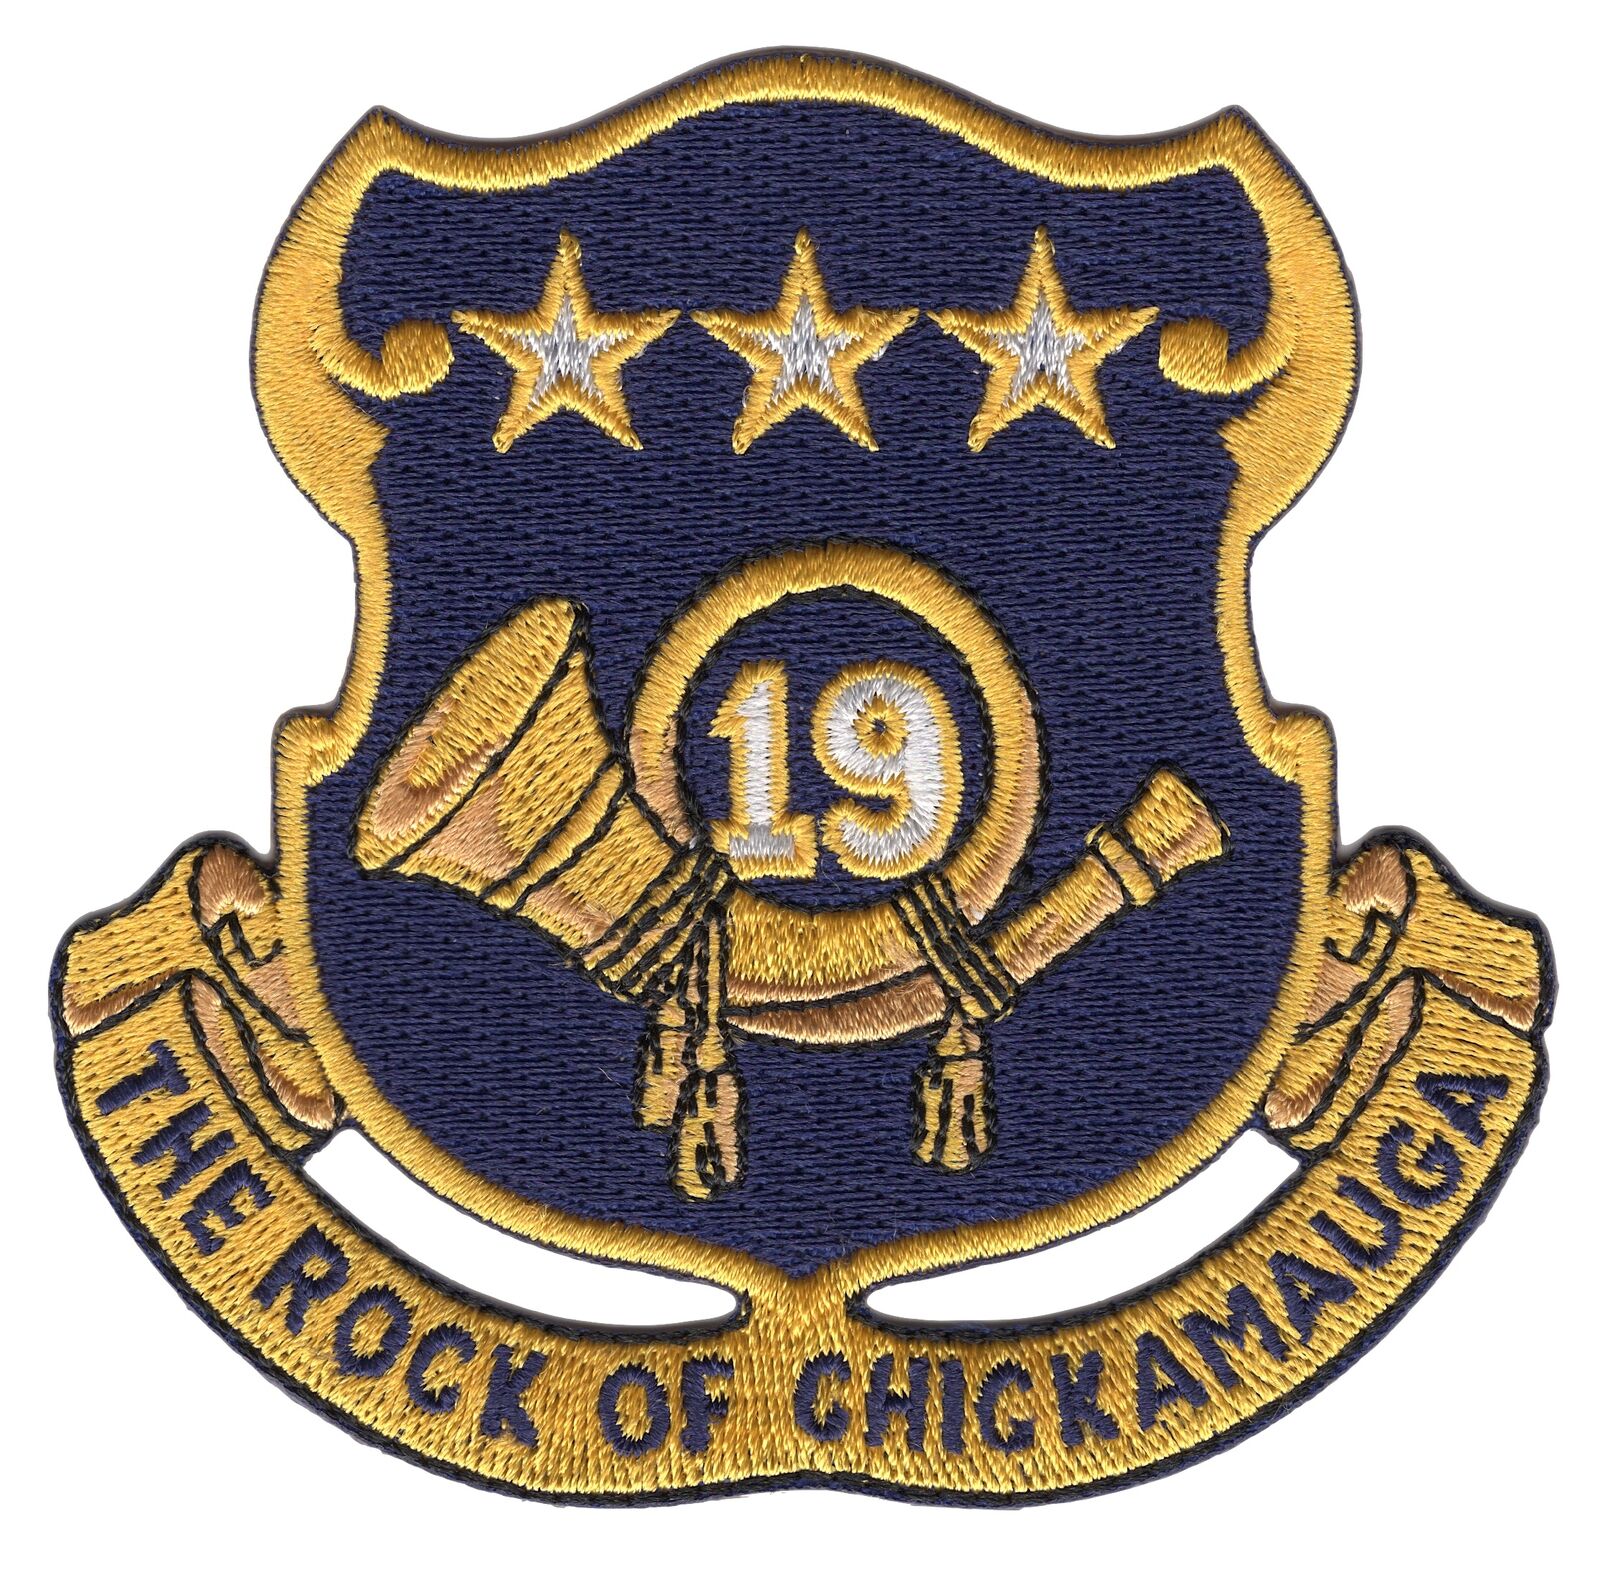 19th Infantry Regiment Patch